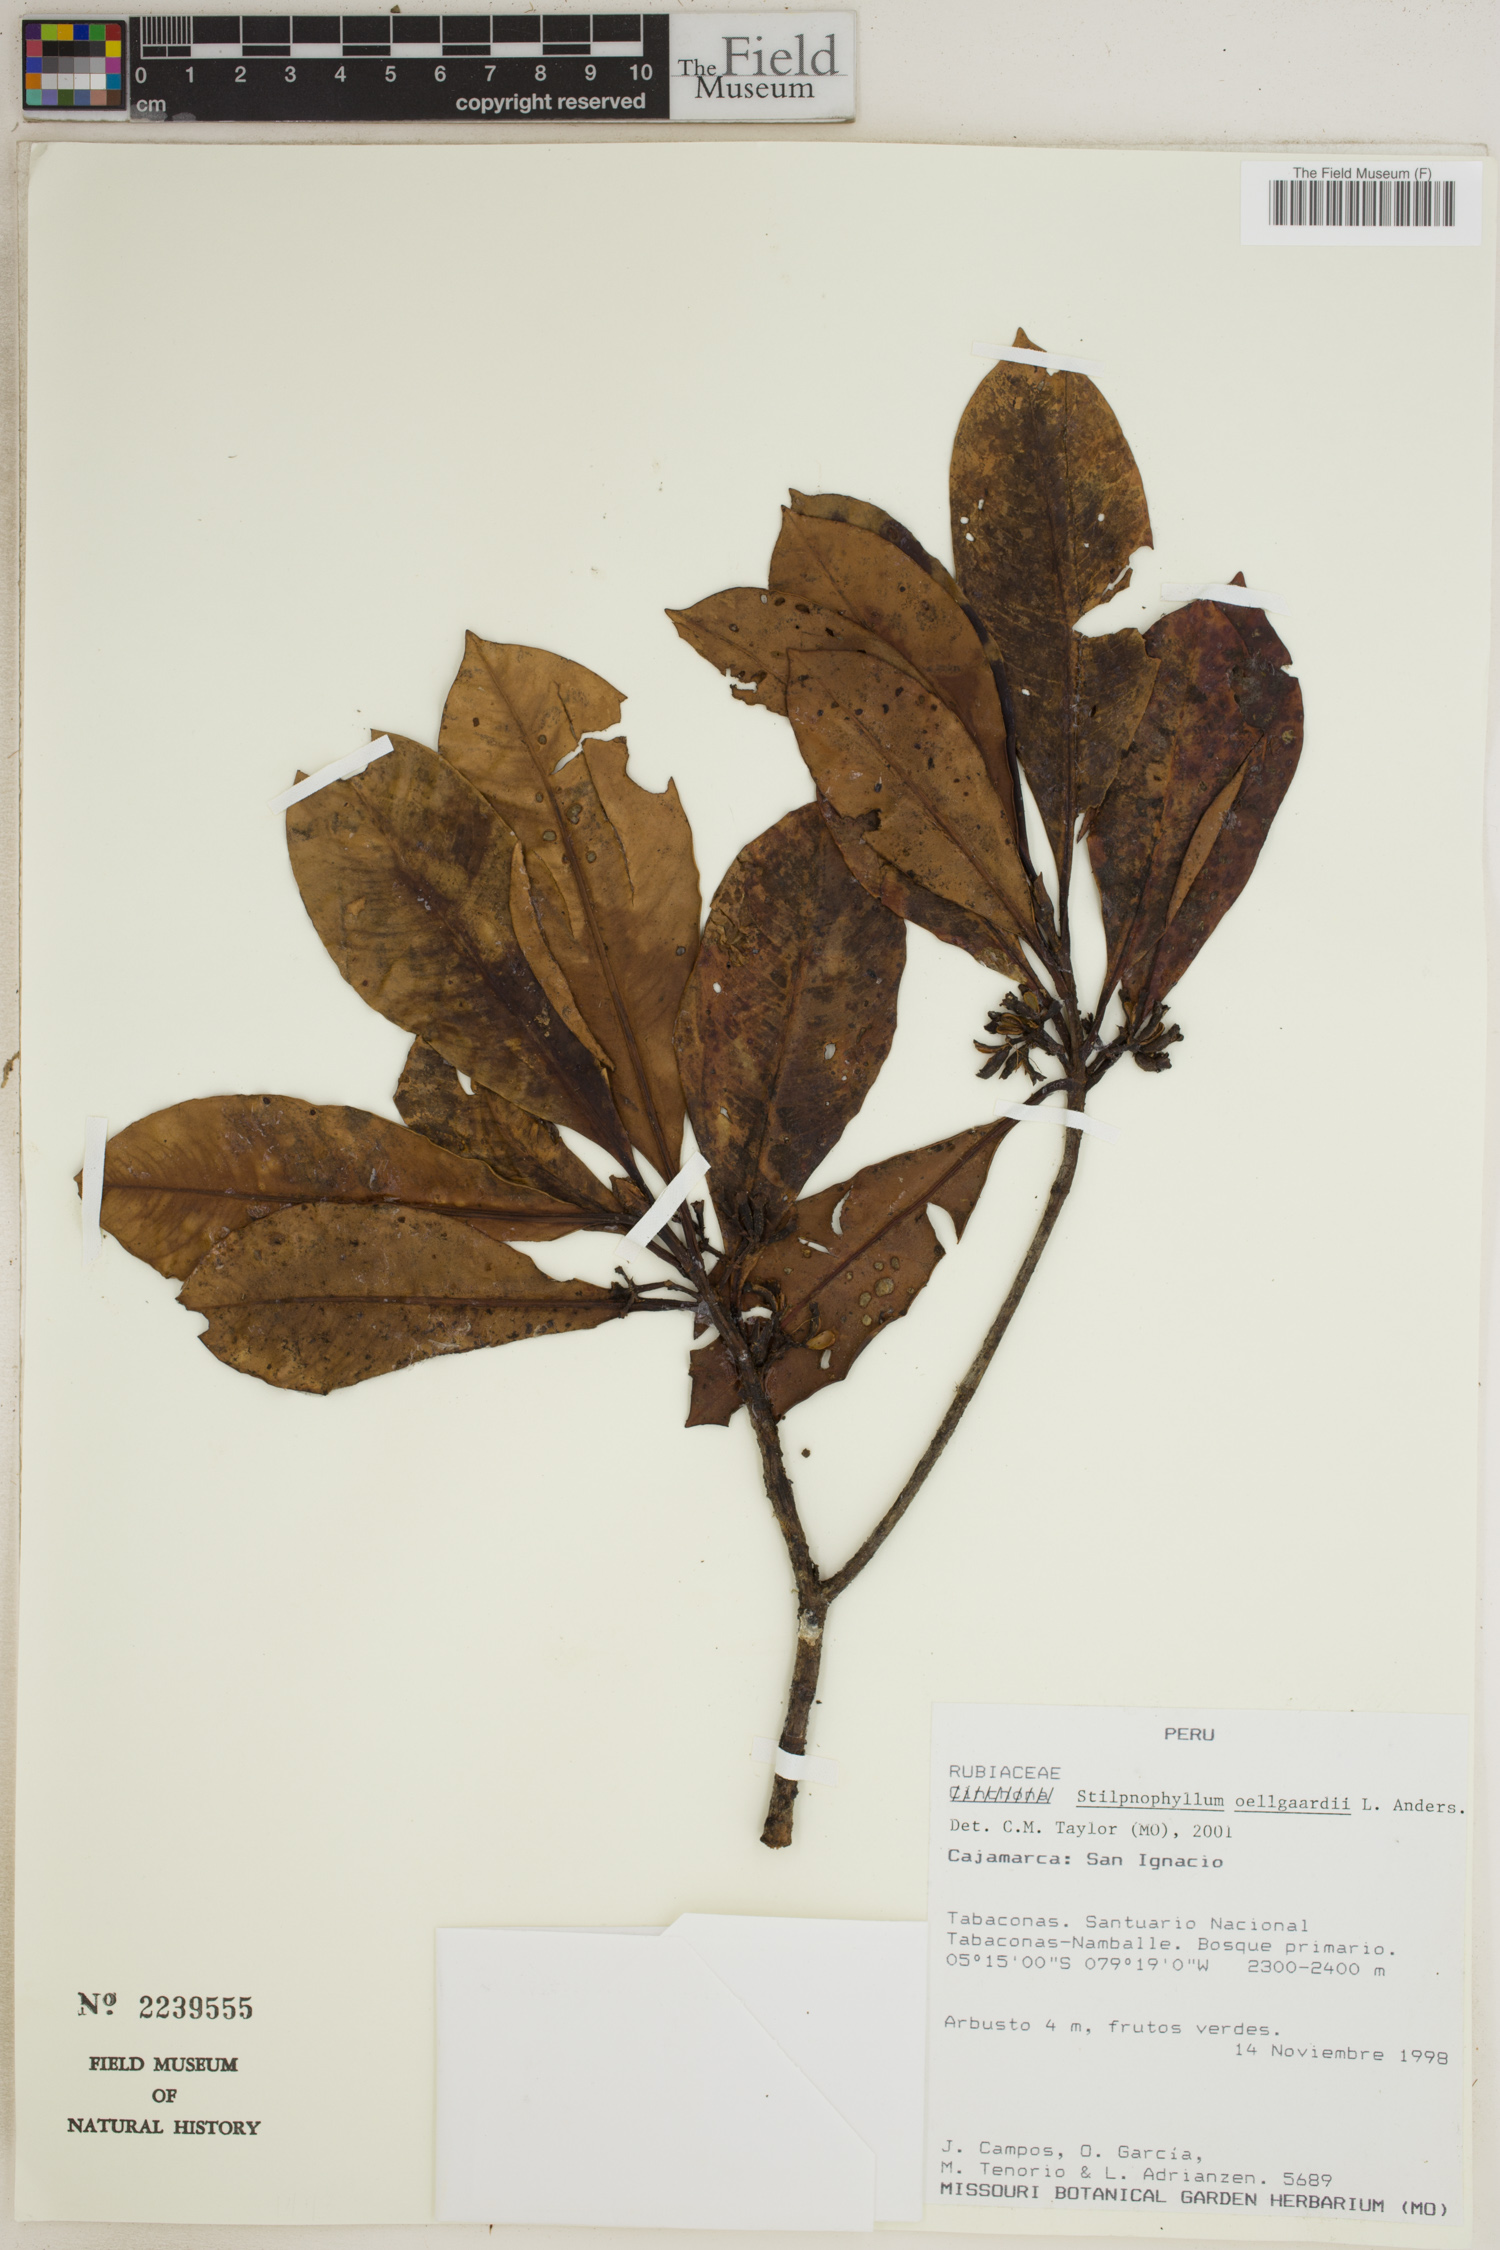 Stilpnophyllum oellgaardii image